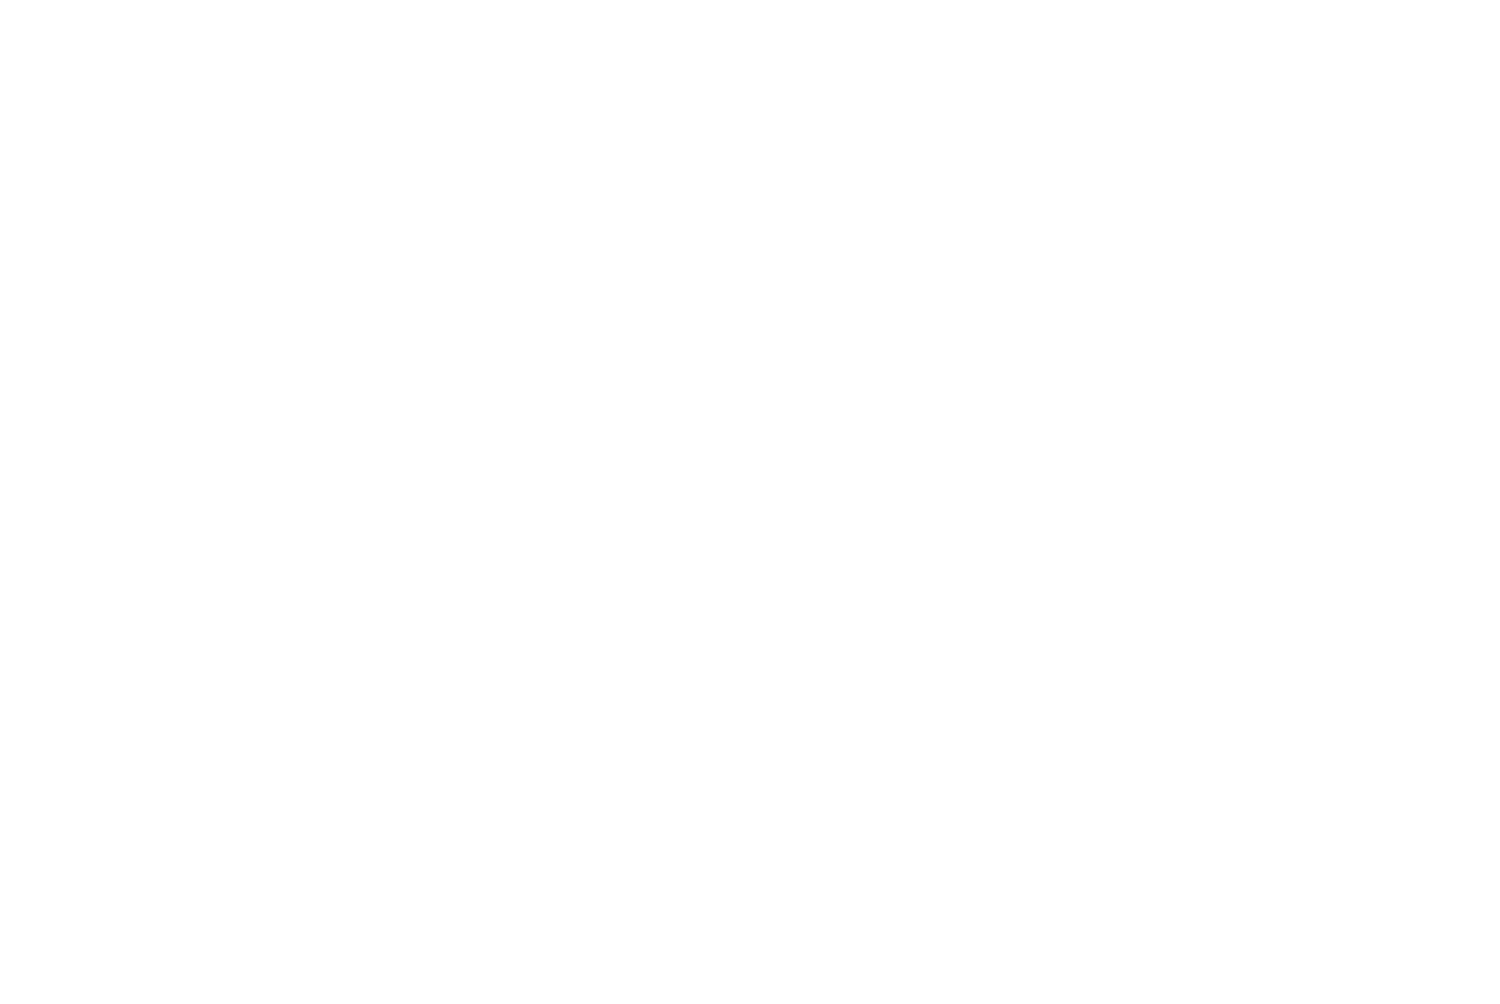 Pierce Fulton